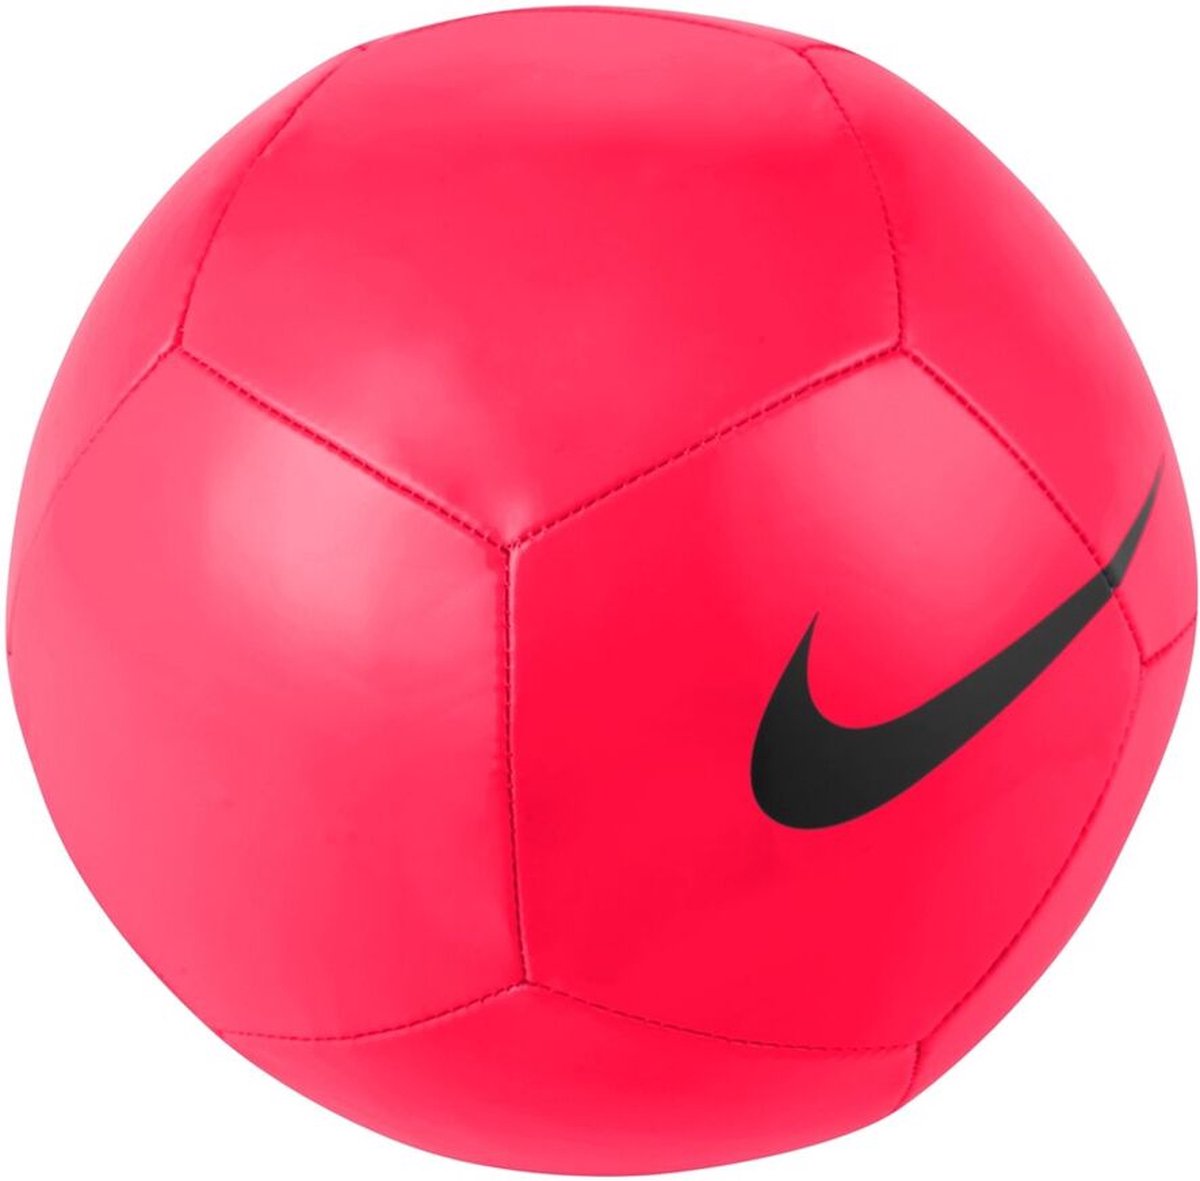 Nike Pitch Team 21 Voetbal - Rood - Maat 5 | bol.com